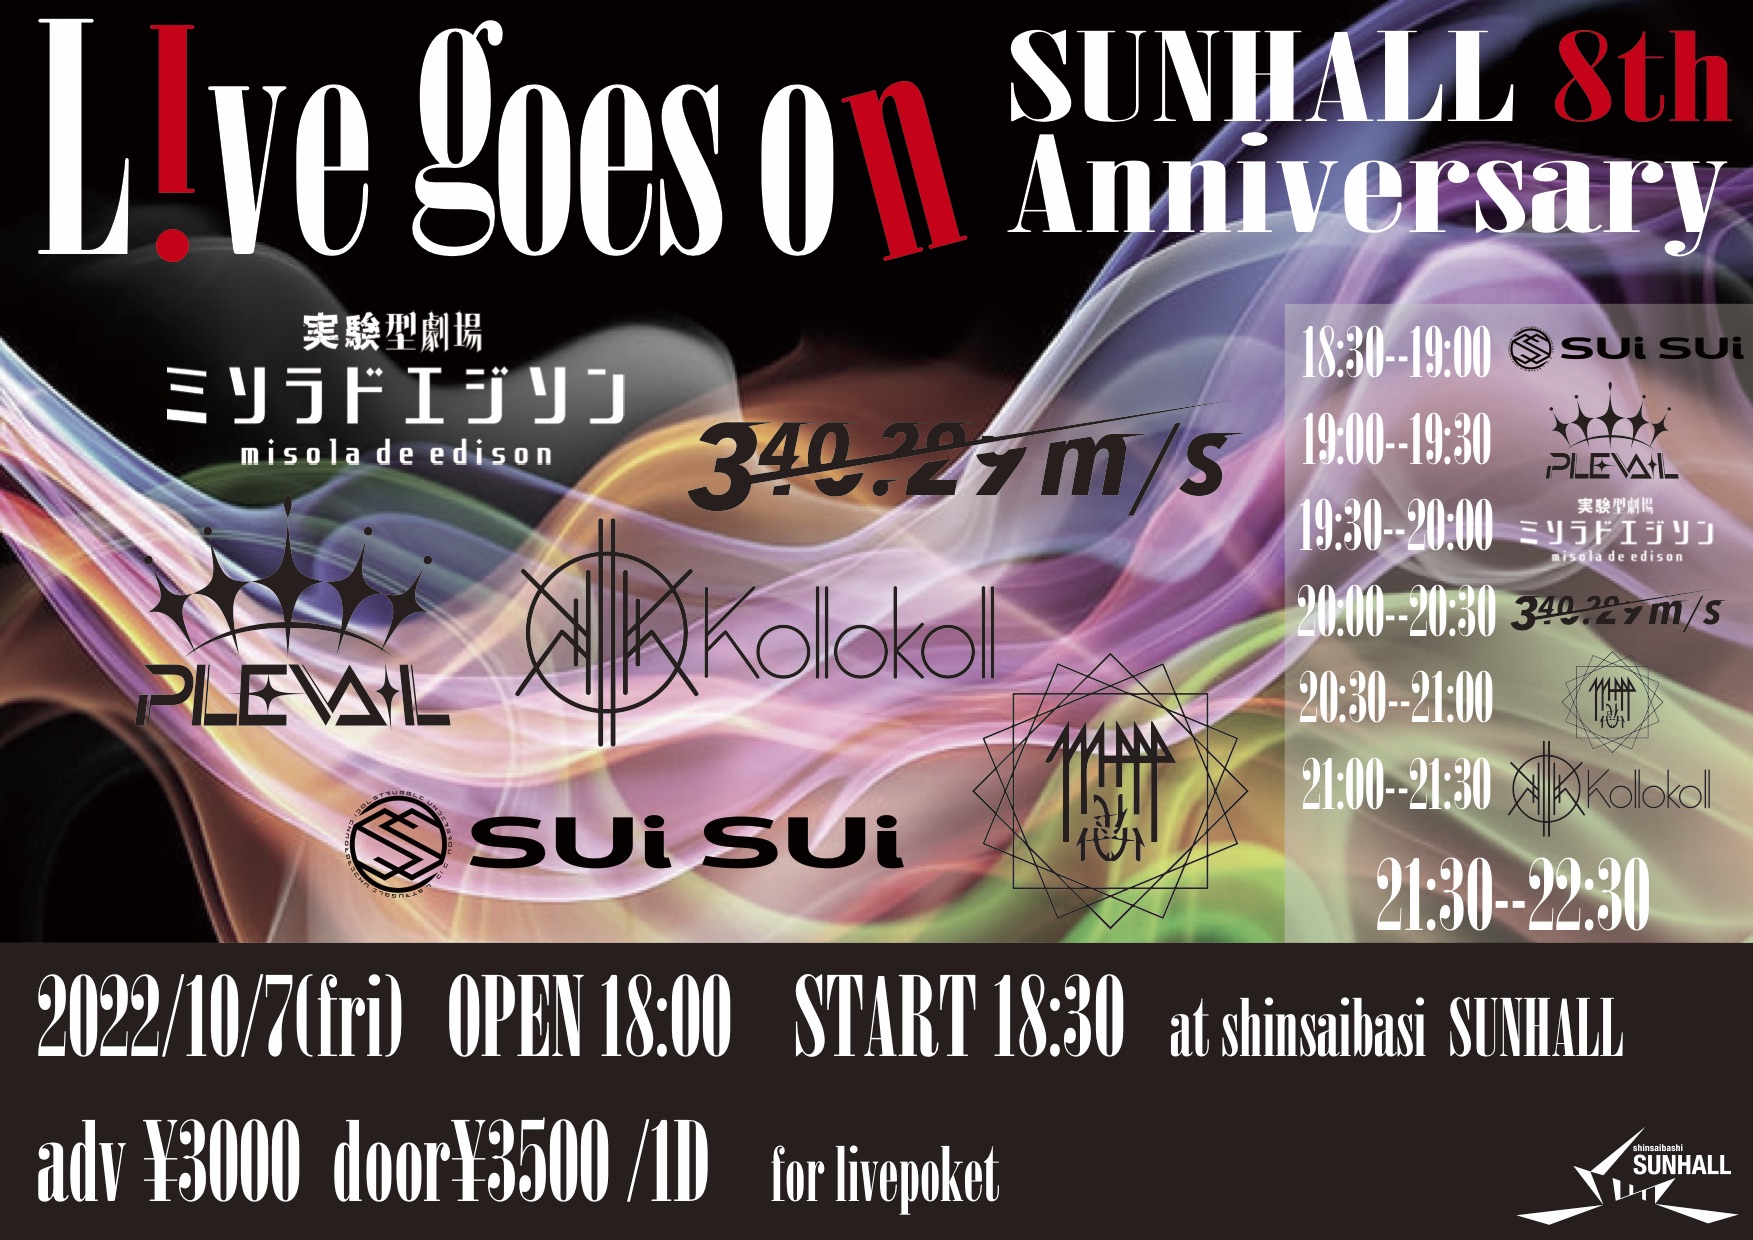 Live goes on SUNHALL 8th Anniversary